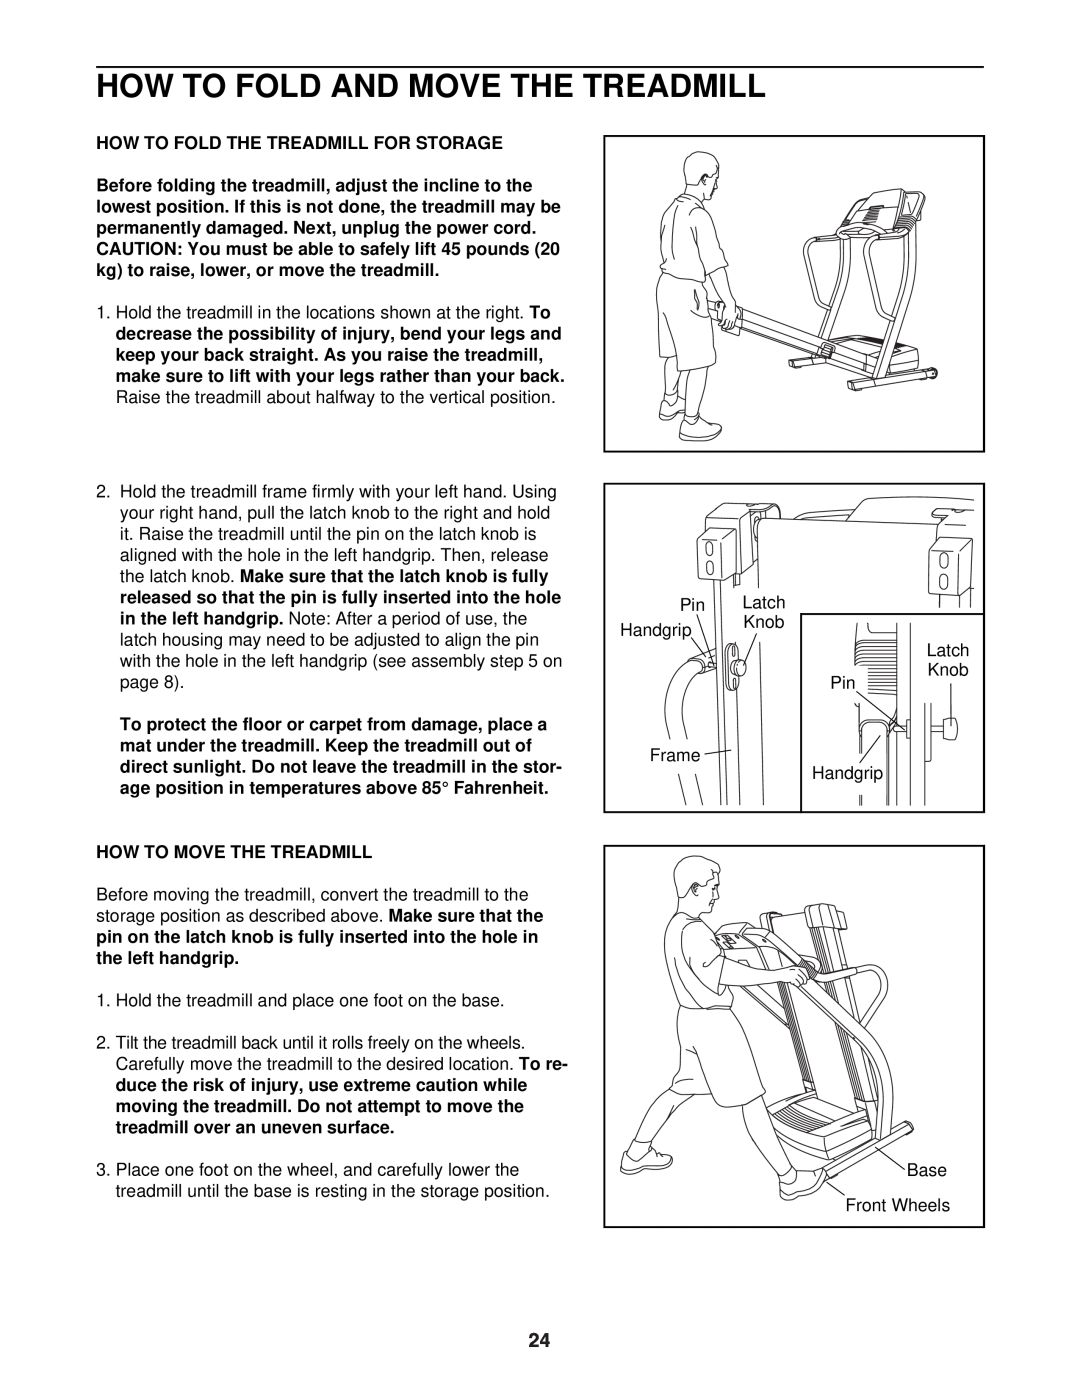 ProForm DTL72940 How To Fold And Move The Treadmill, How To Fold The Treadmill For Storage, How To Move The Treadmill 